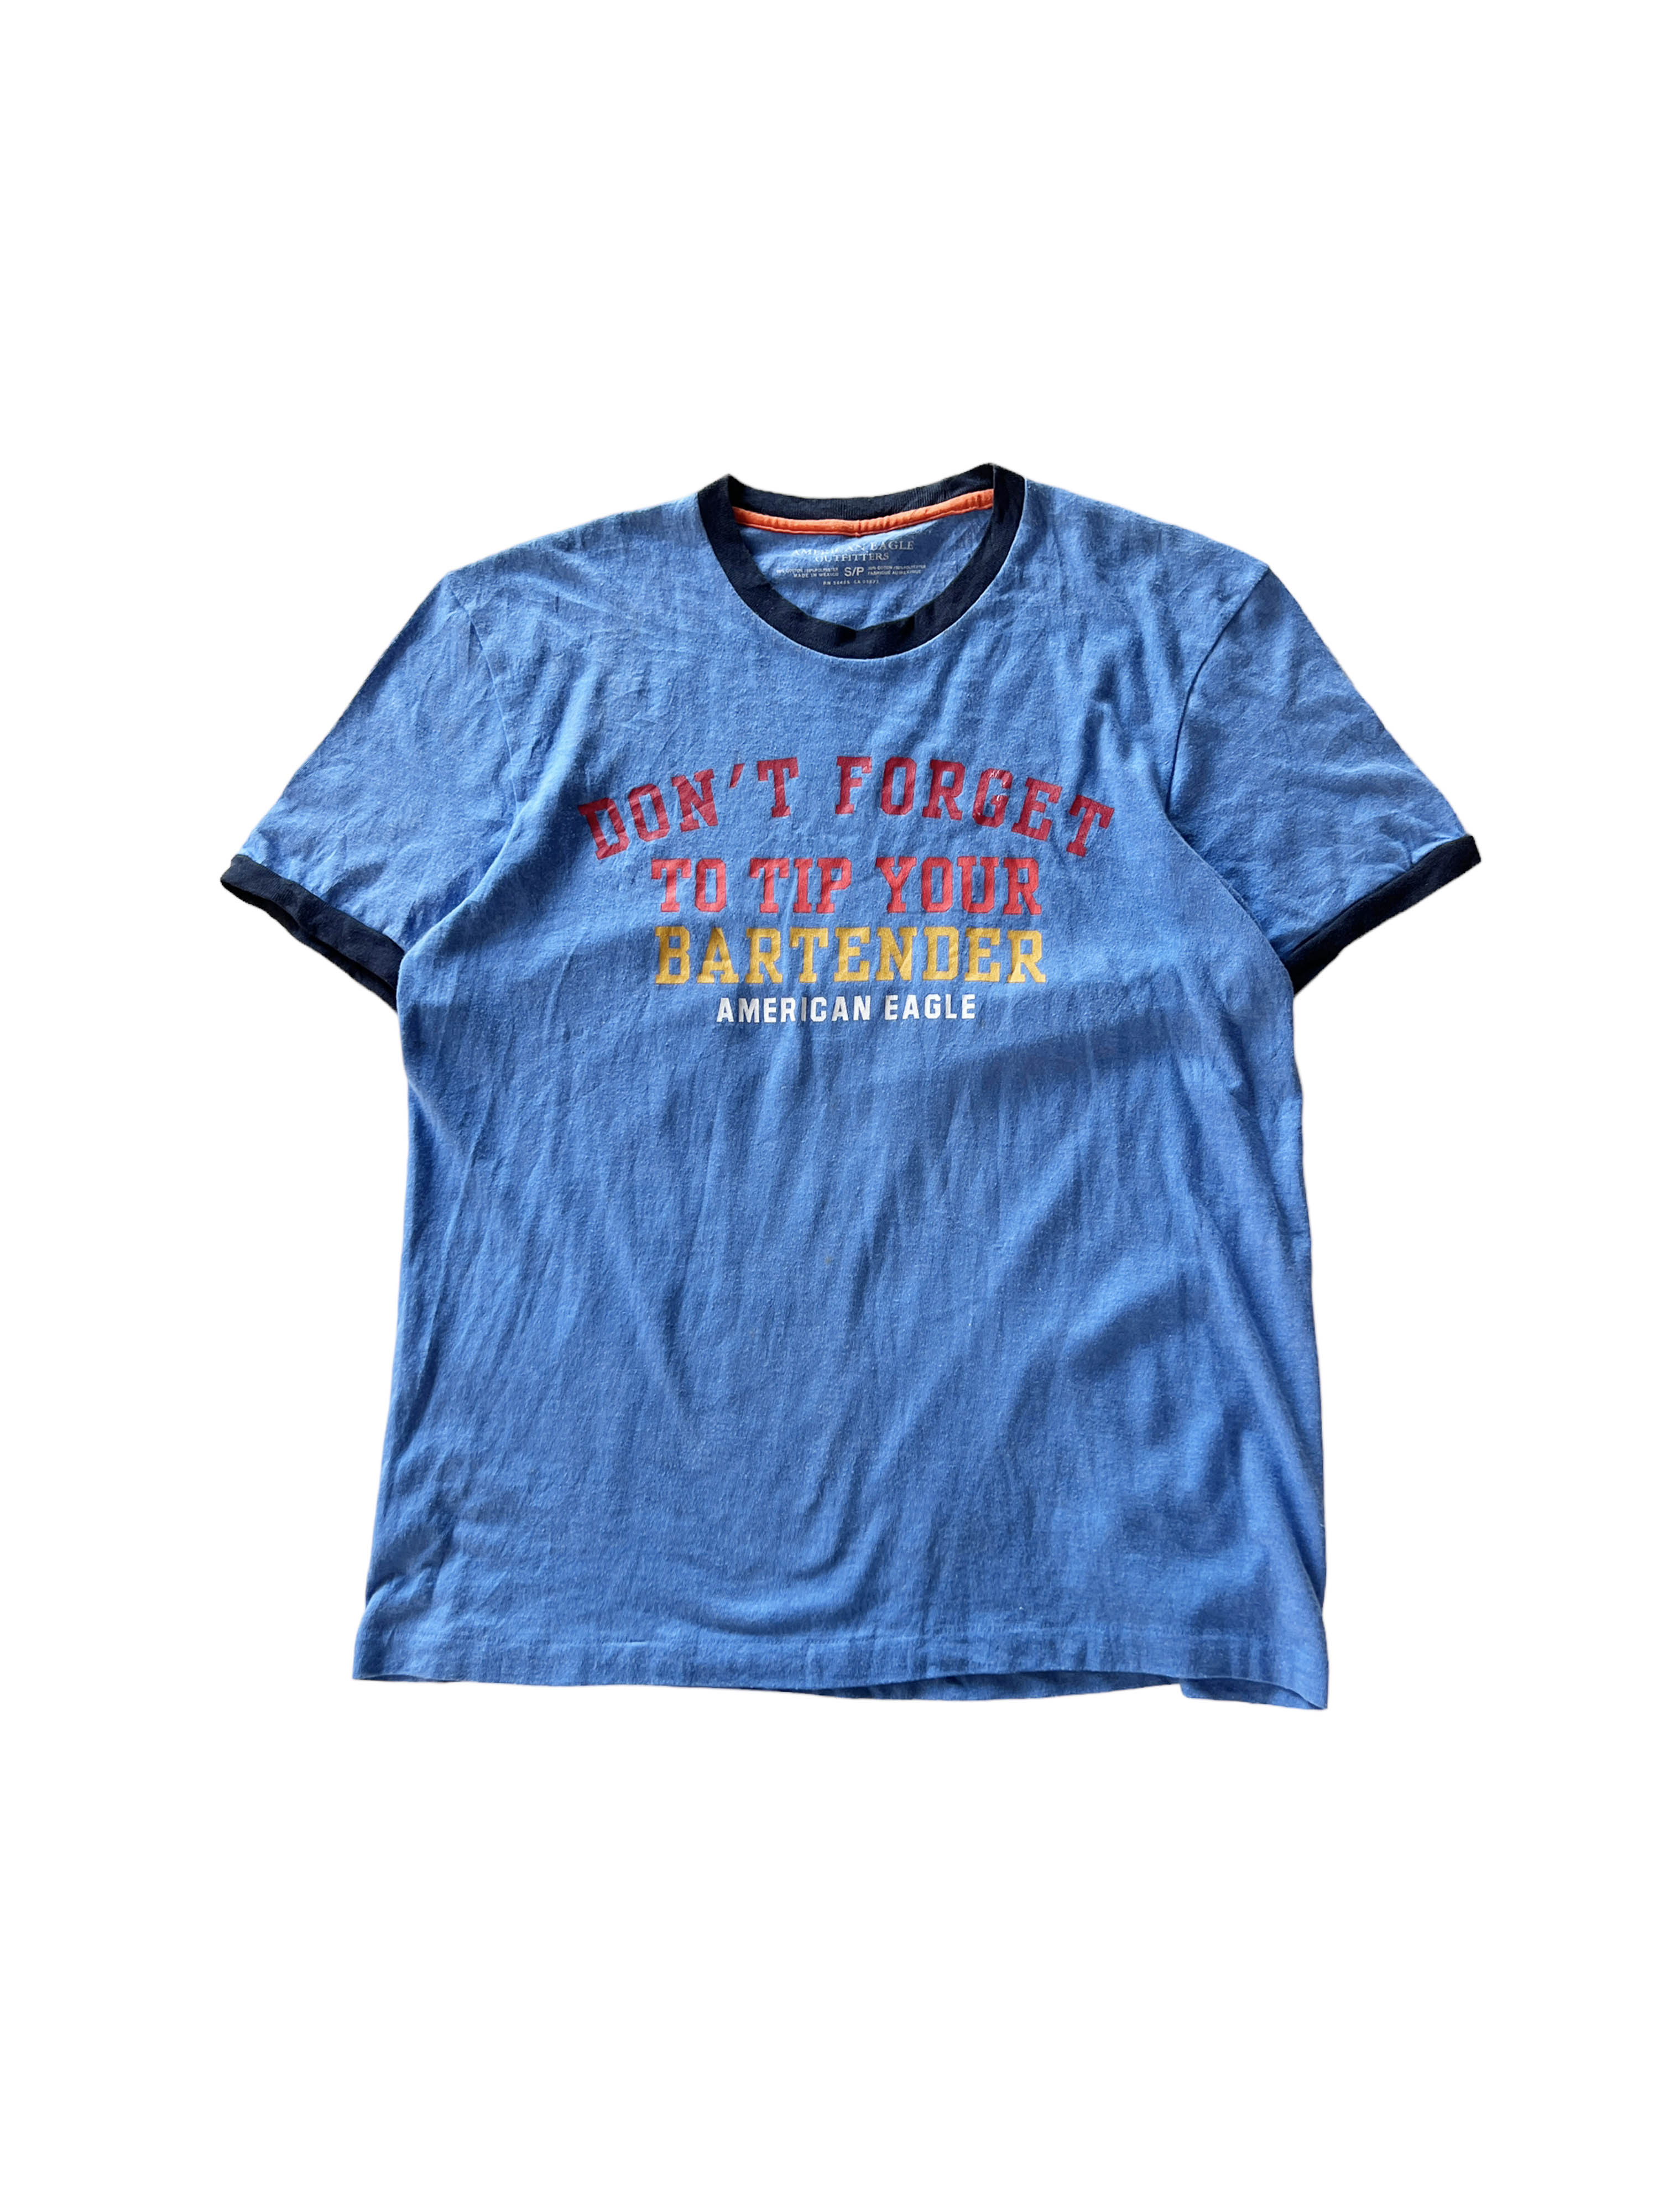 AMERICAN EAGLE ringer t-shirts